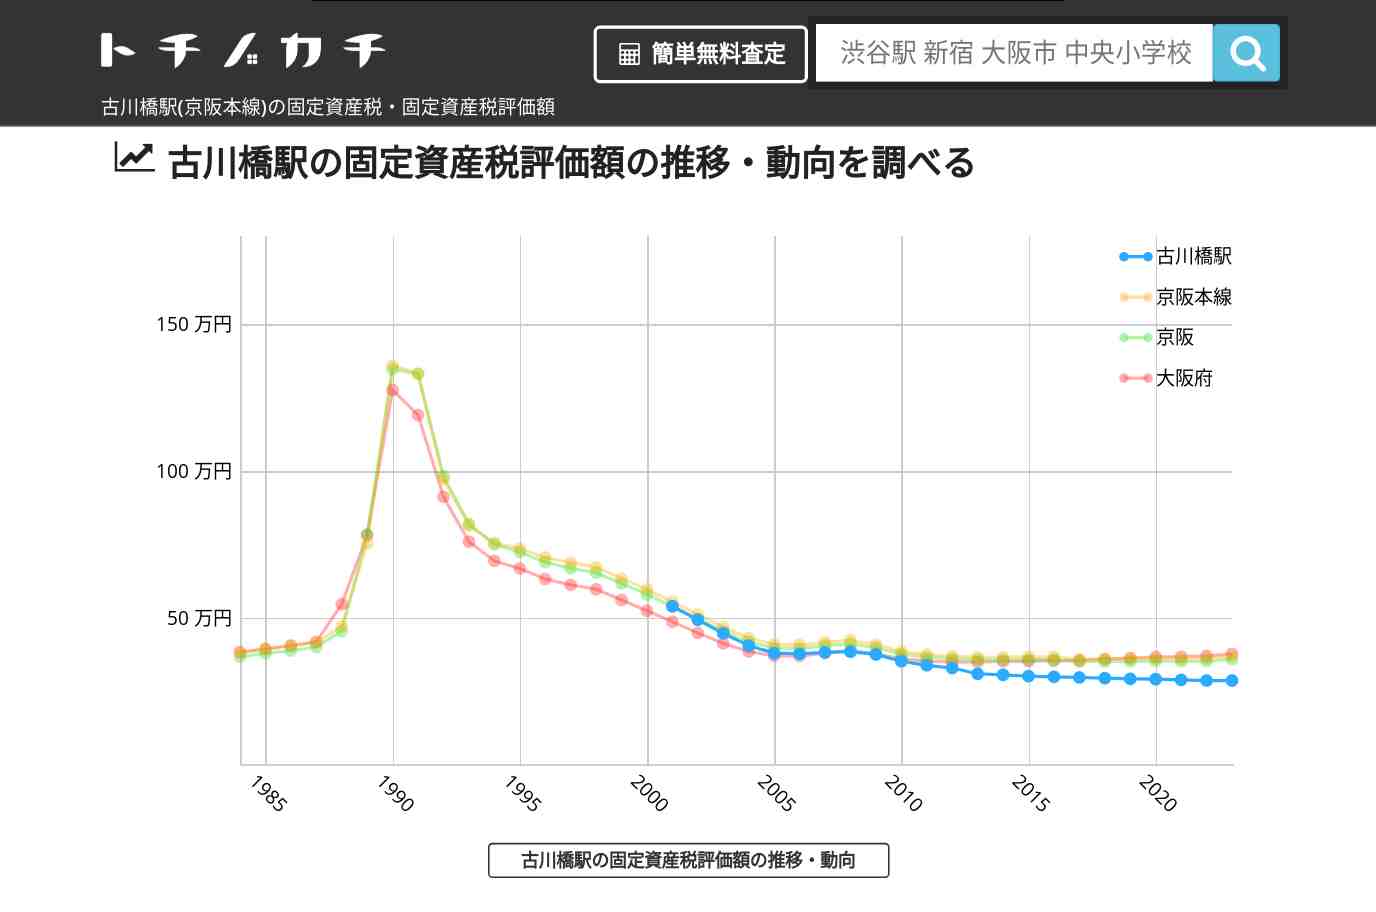 古川橋駅(京阪本線)の固定資産税・固定資産税評価額 | トチノカチ